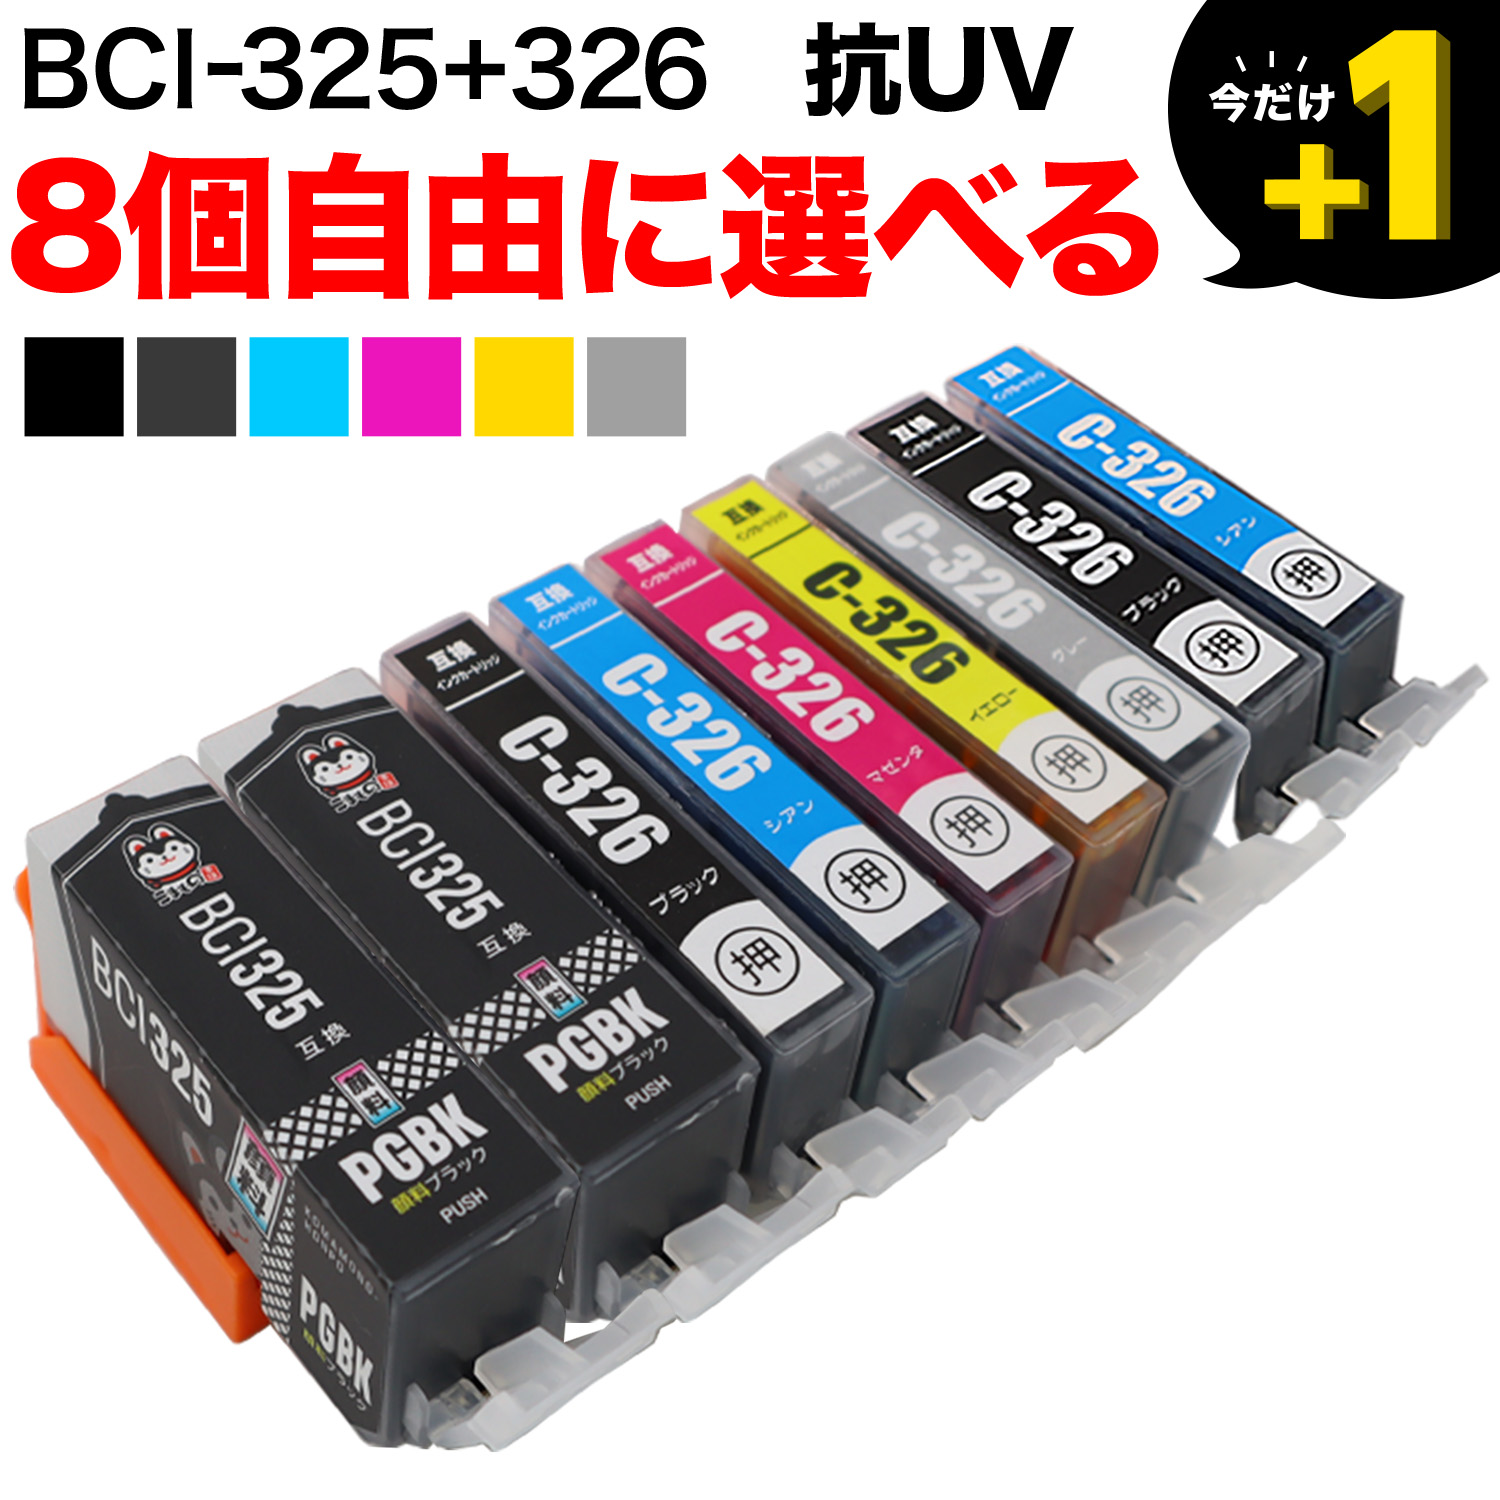 BCI-326+325 キヤノン用 互換インク 色あせに強いタイプ 自由選択8個